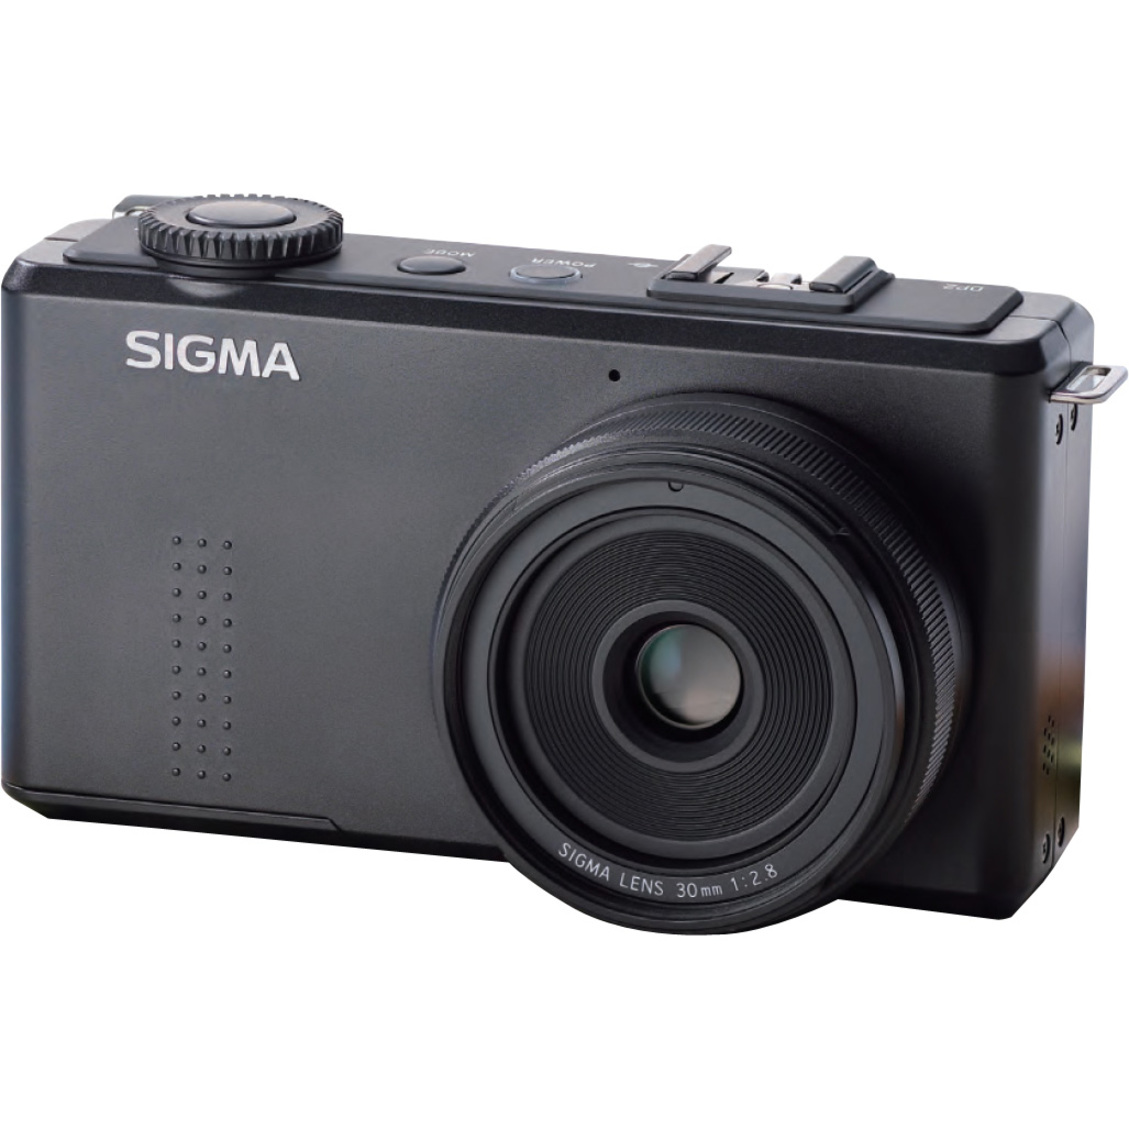 Sigma DP2 Merrill 46 Megapixel Compact Camera, Black - image 1 of 6